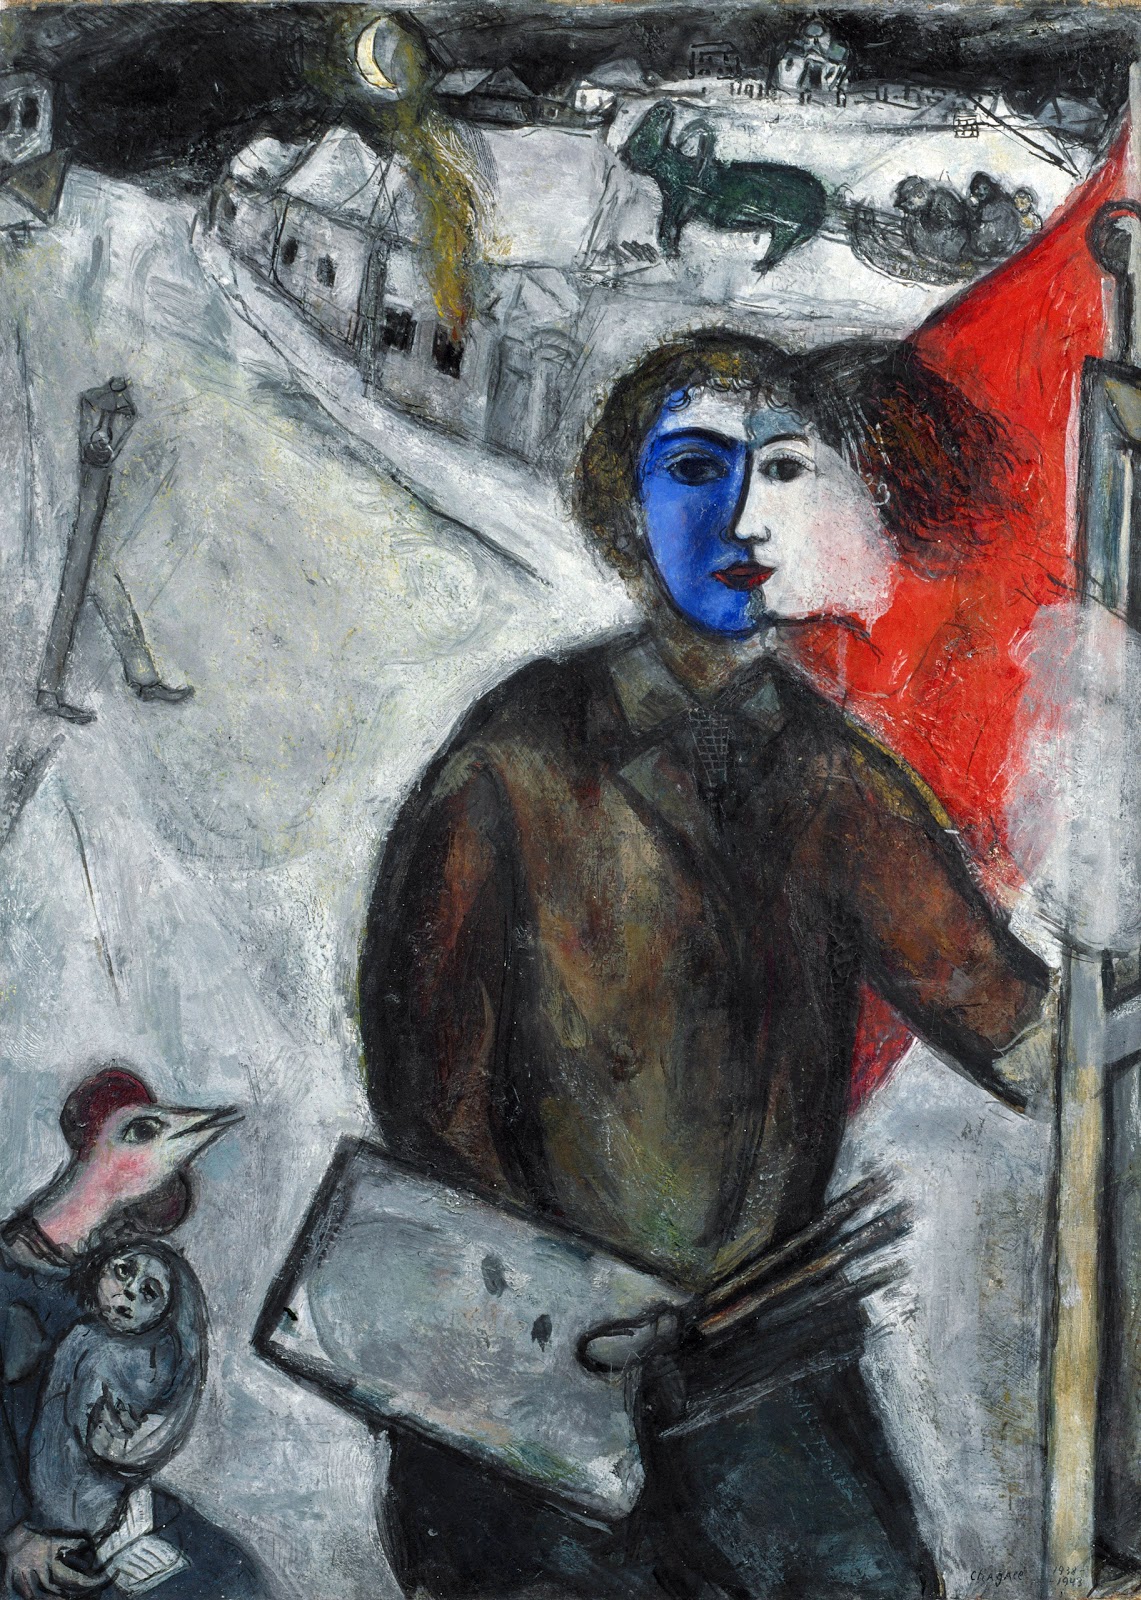 Marc+Chagall-1887-1985 (218).jpg